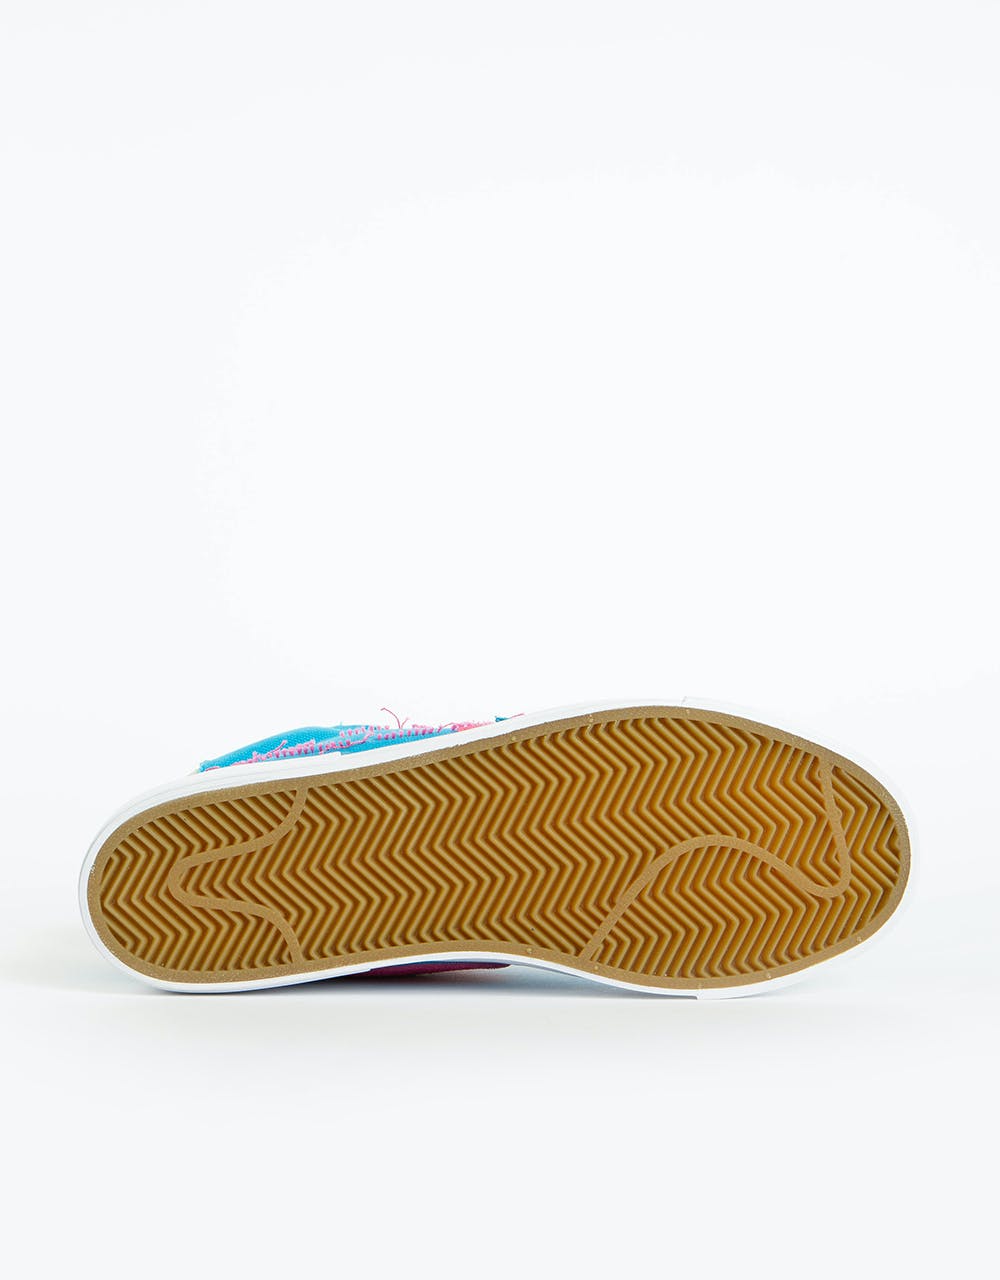 Nike SB Zoom Blazer Mid Edge Skate Shoes - Laser Blue/Watermelon-University Gold